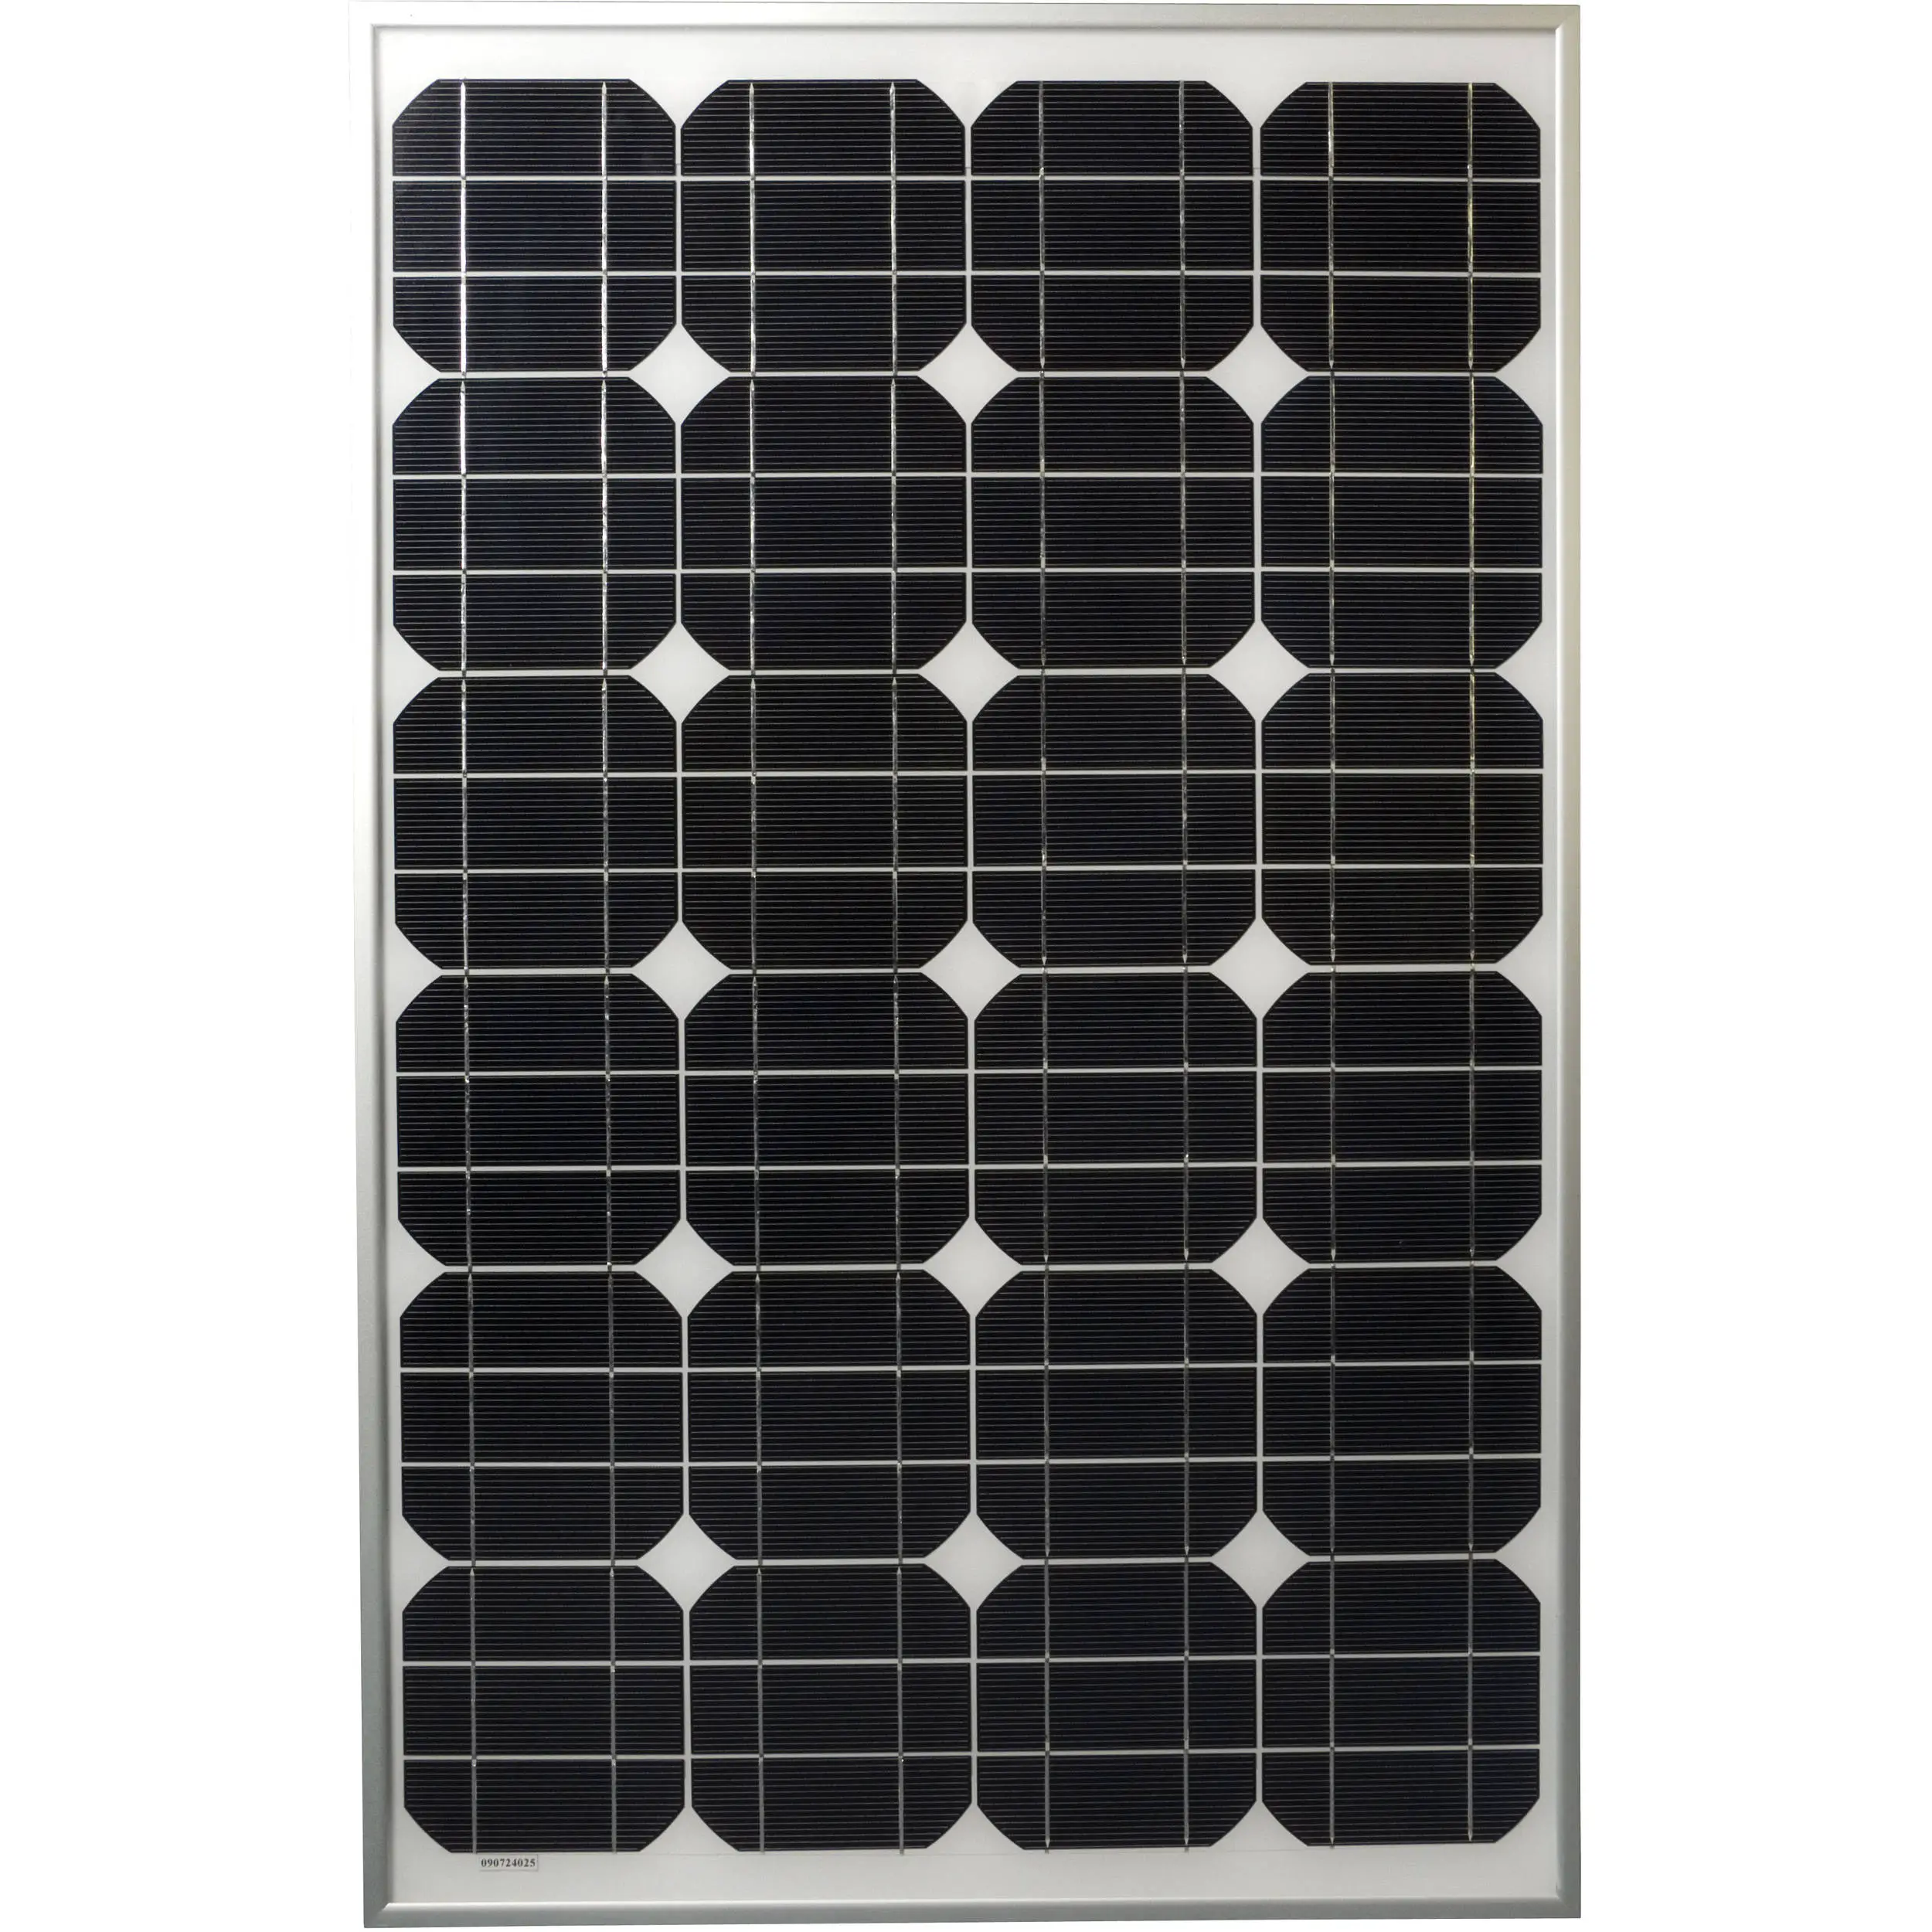 WAGAN 2503 Large Scale Solar Panel 2503 B& H Photo Video